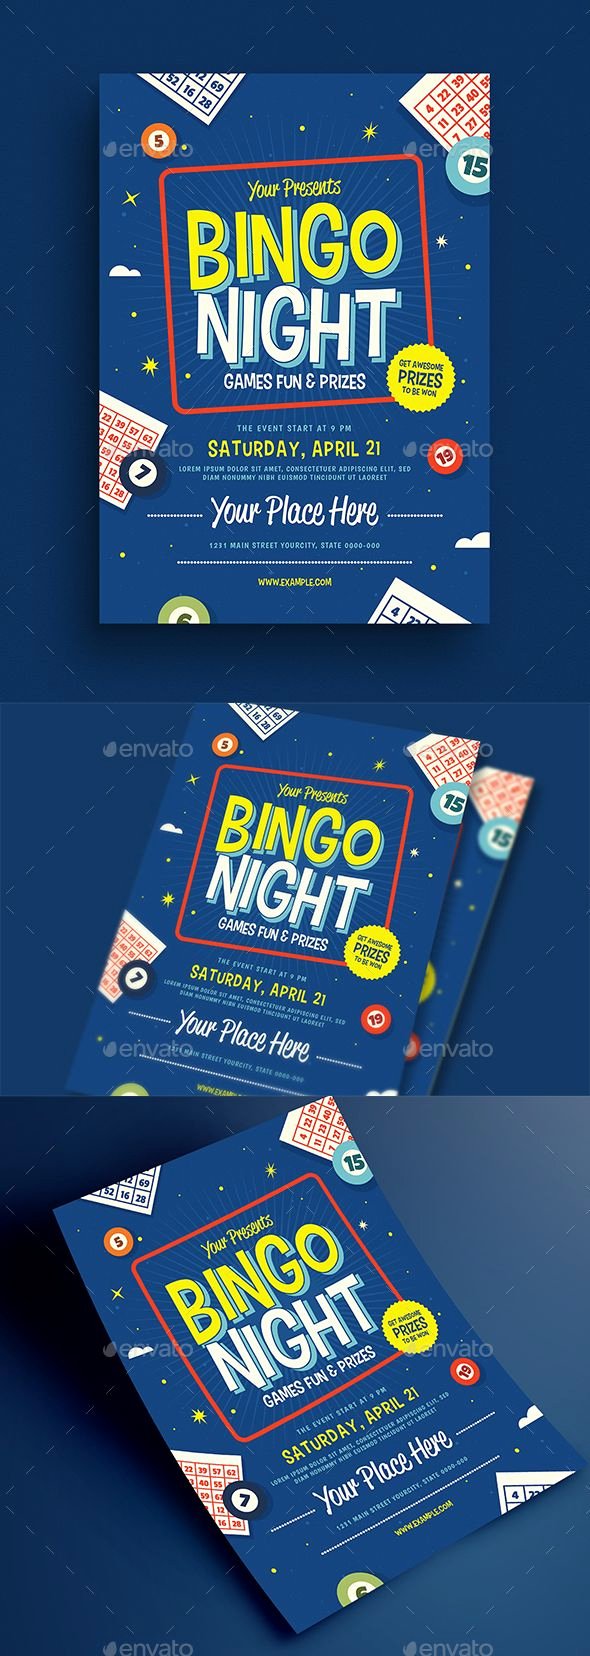 Bingo Flyer Template Free Elegant Bingo Night event Flyer Template Psd Ai Illustrator Download Flyer Templates